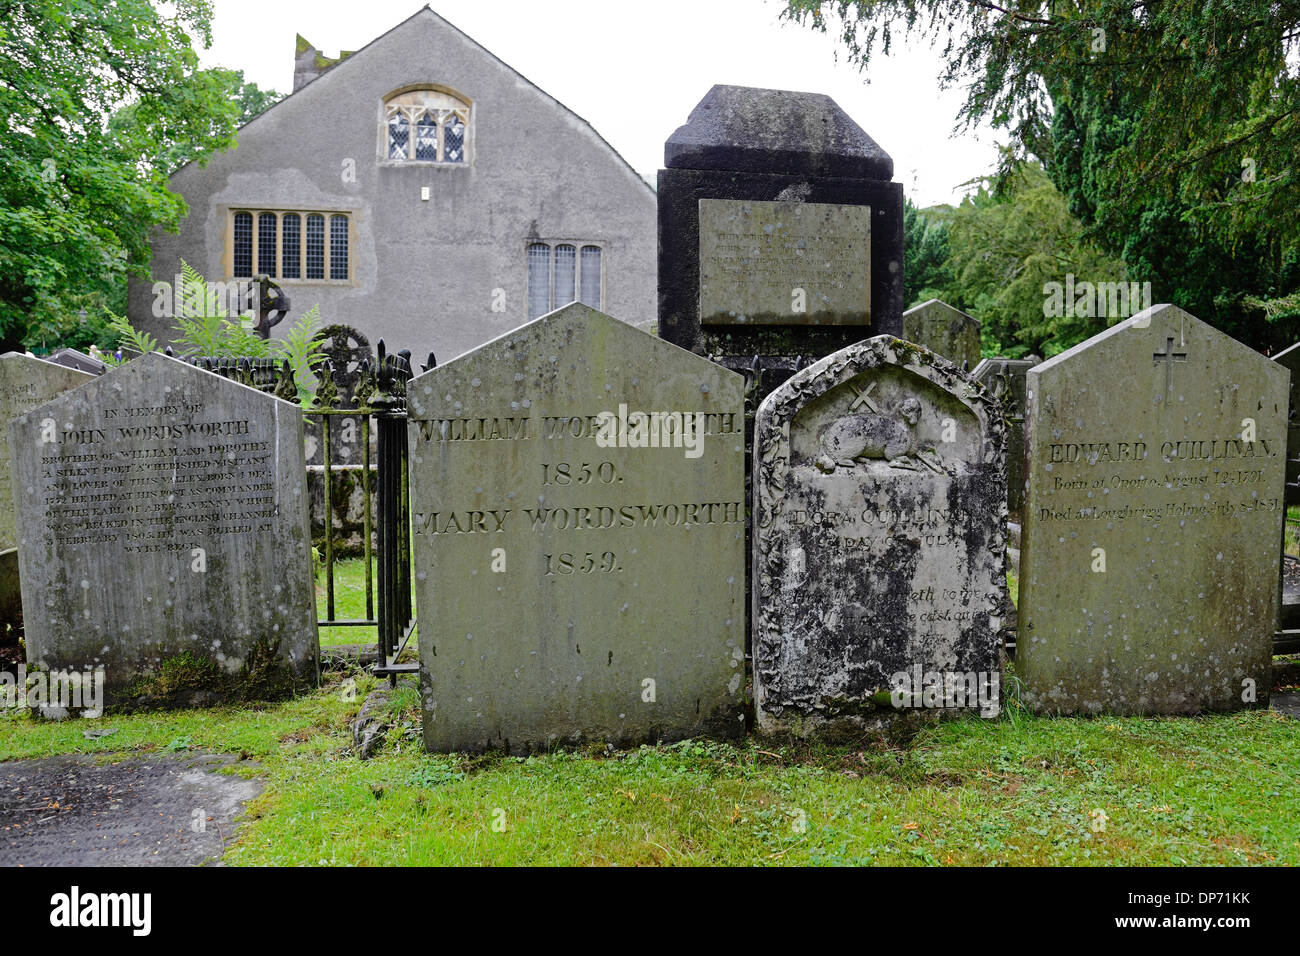 Tombes de John, William et Mary Wordsworth et Dora et Edward Quillinan, St Oswalds Churchyard, Grasmere, Lake District, Cumbria, Angleterre, Royaume-Uni Banque D'Images